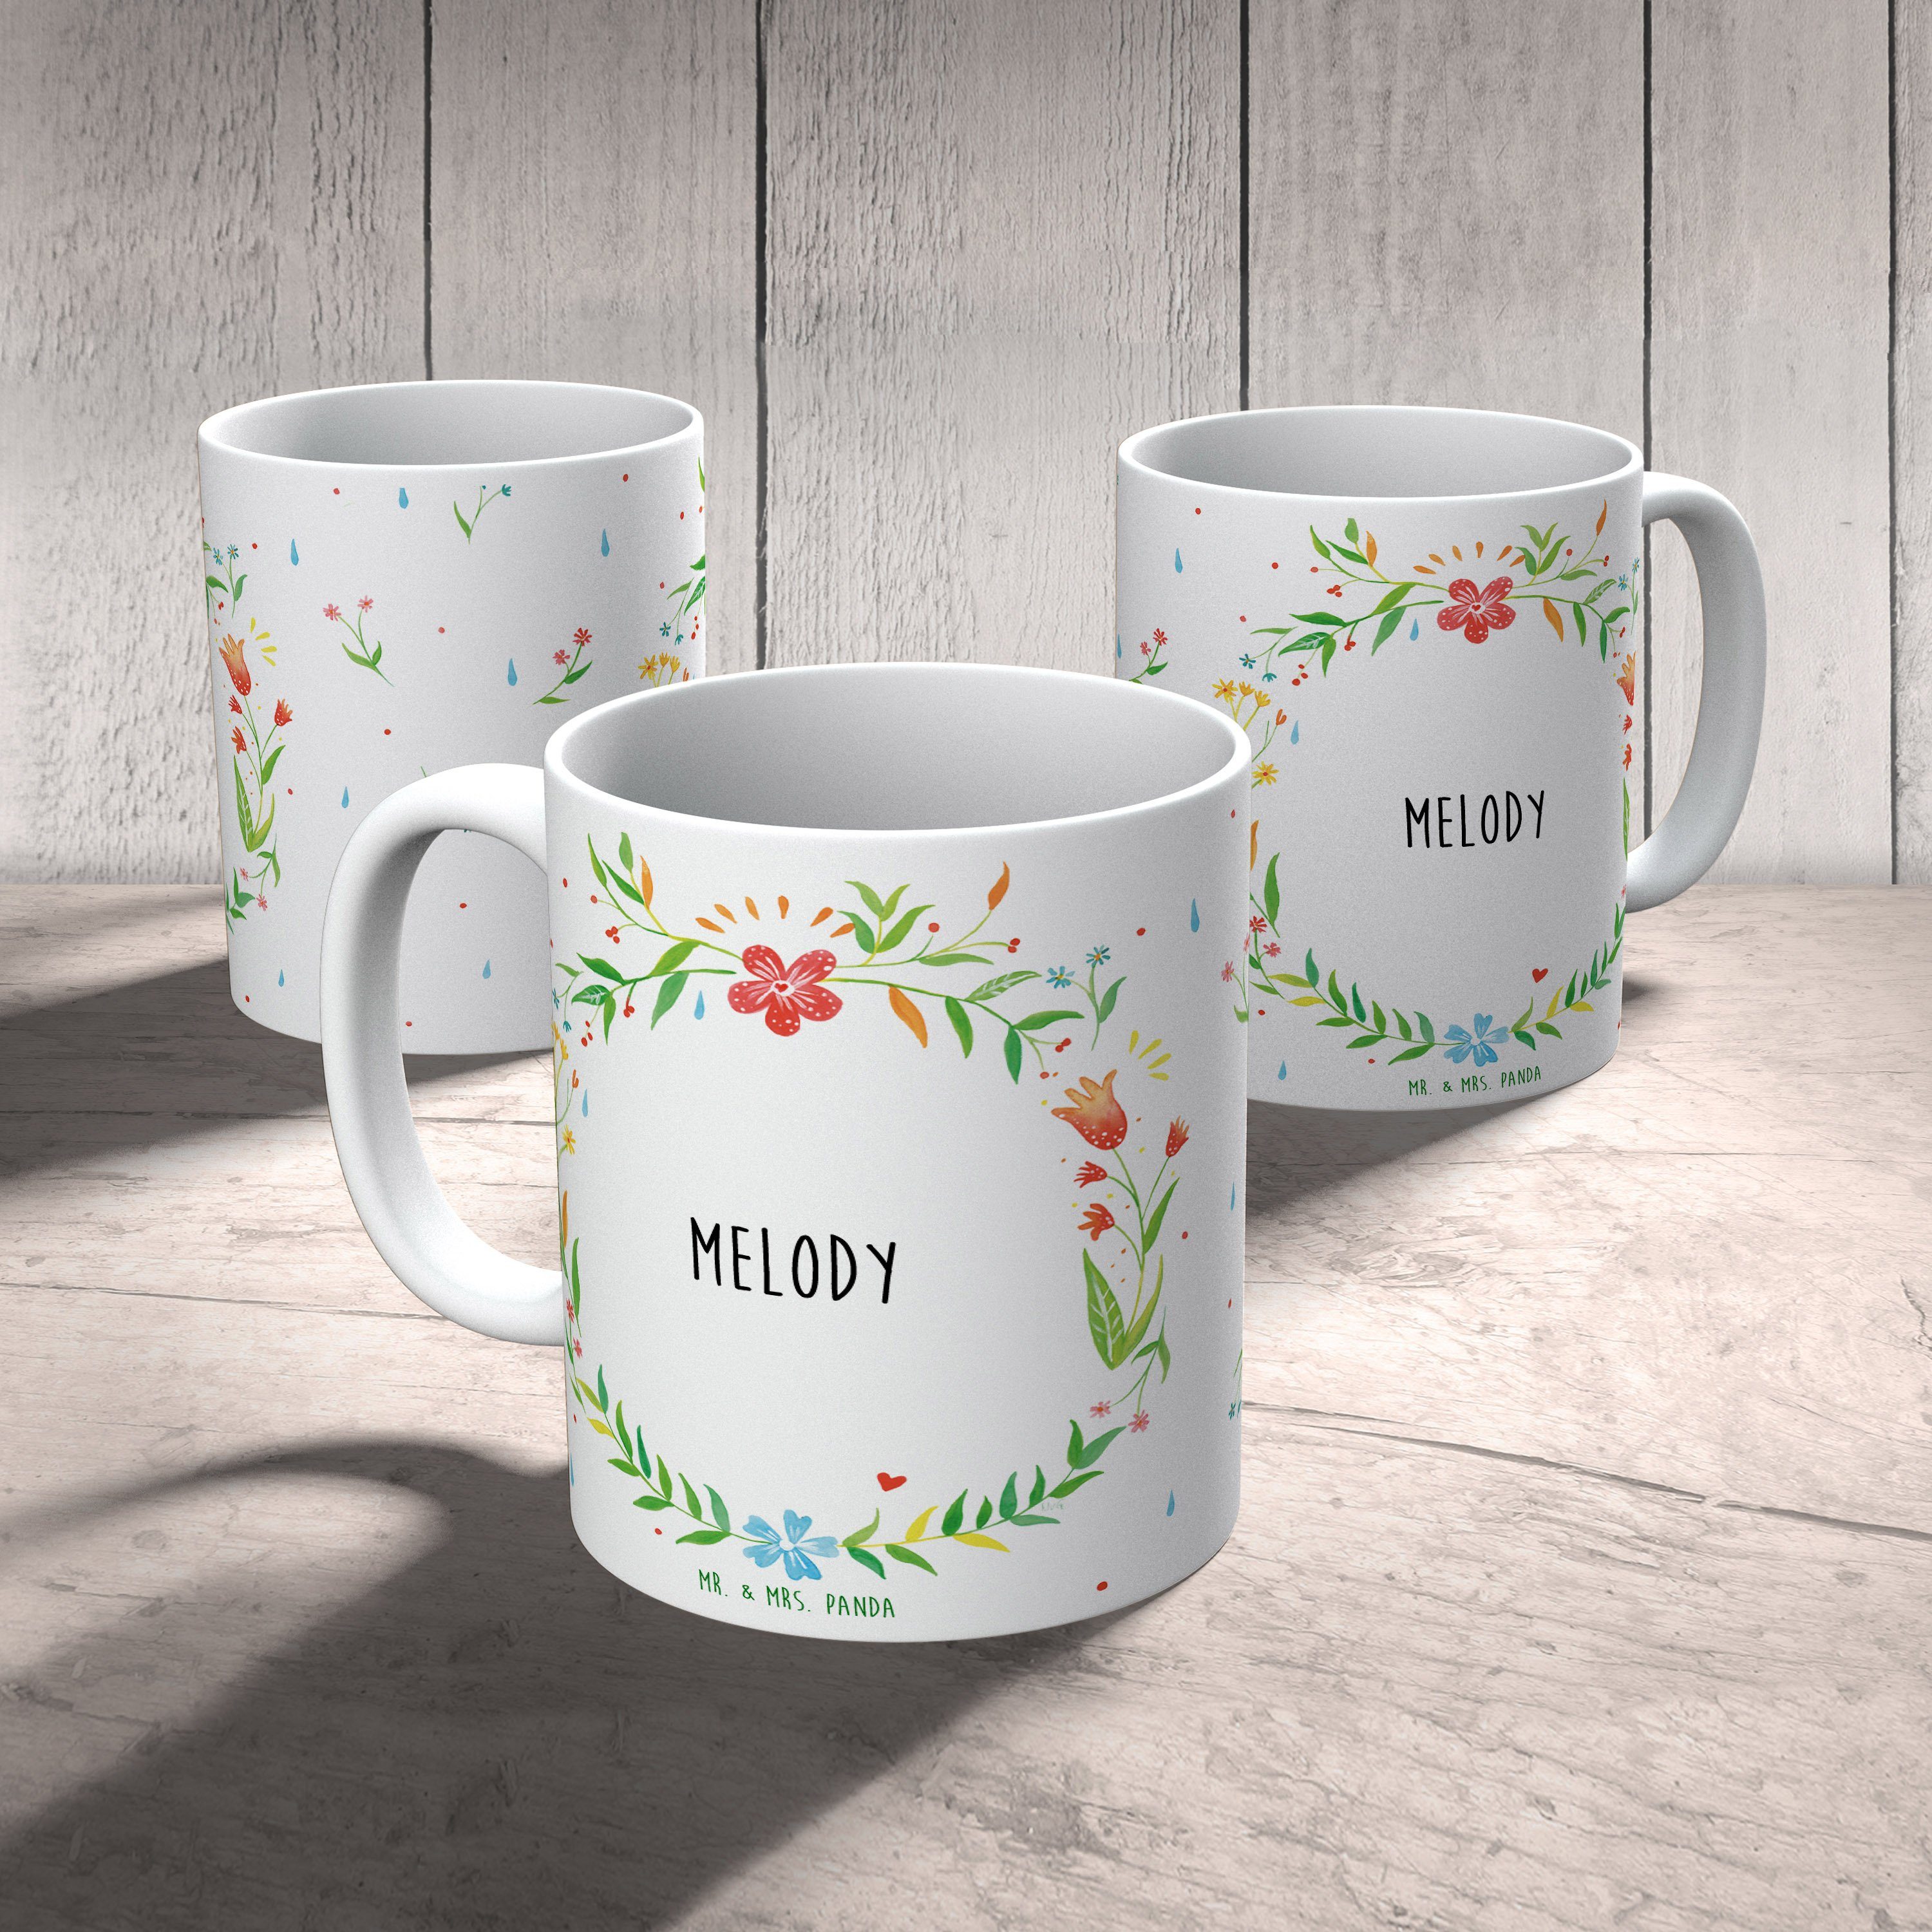 Motive, Geschenk, Keramik Porzellant, & Kaffeebecher, Tasse Tasse, Büro - Panda Melody Tasse Mrs. Mr.